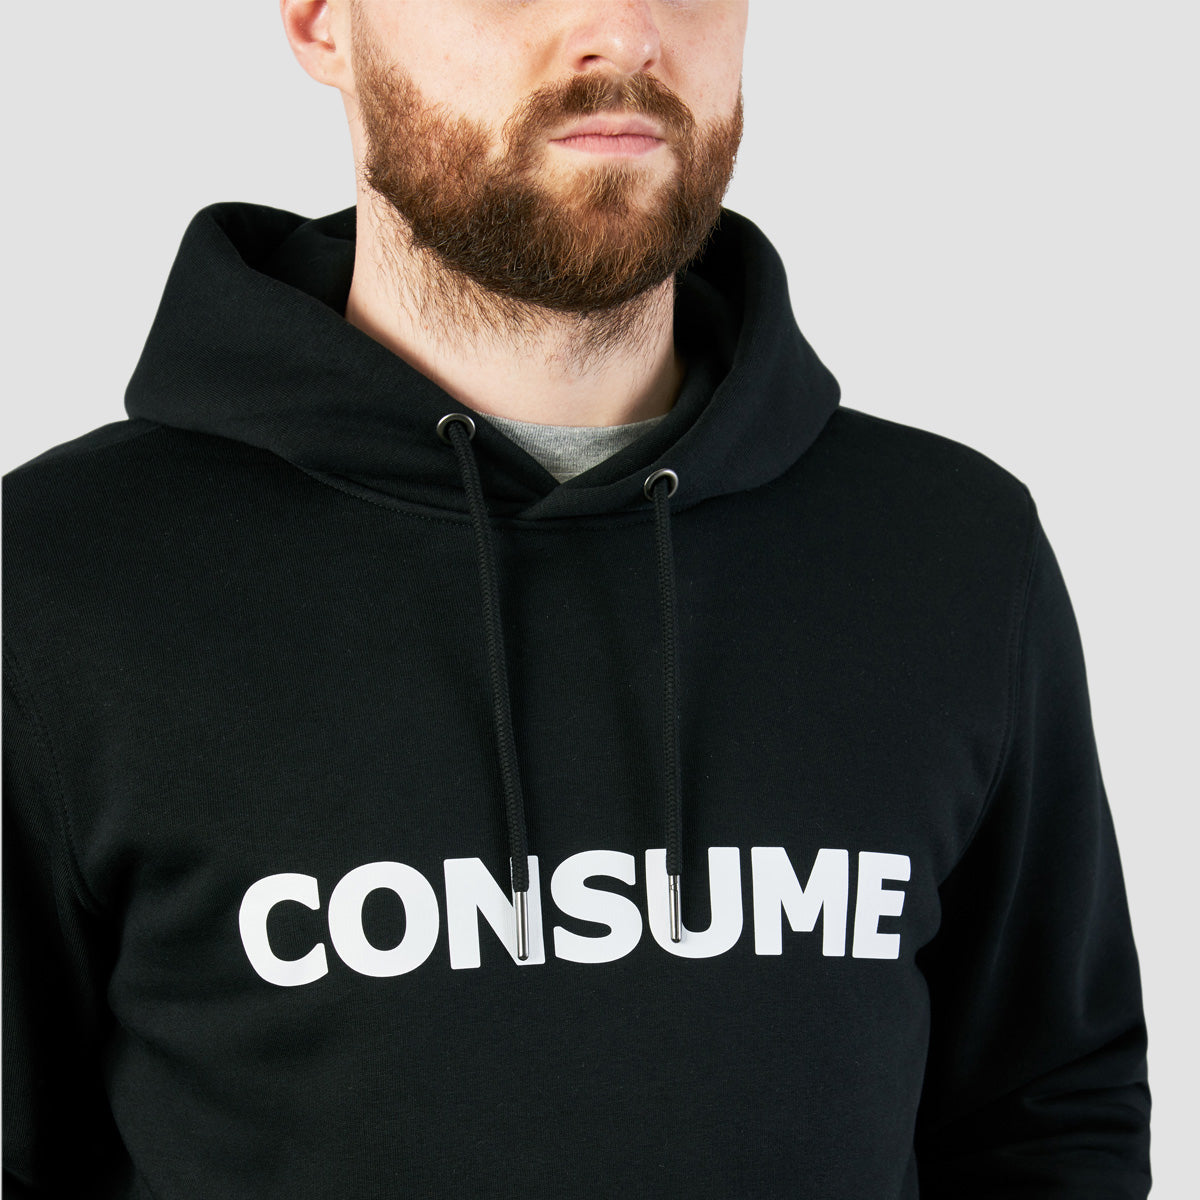 Consume Logo Pullover Hoodie Black/White